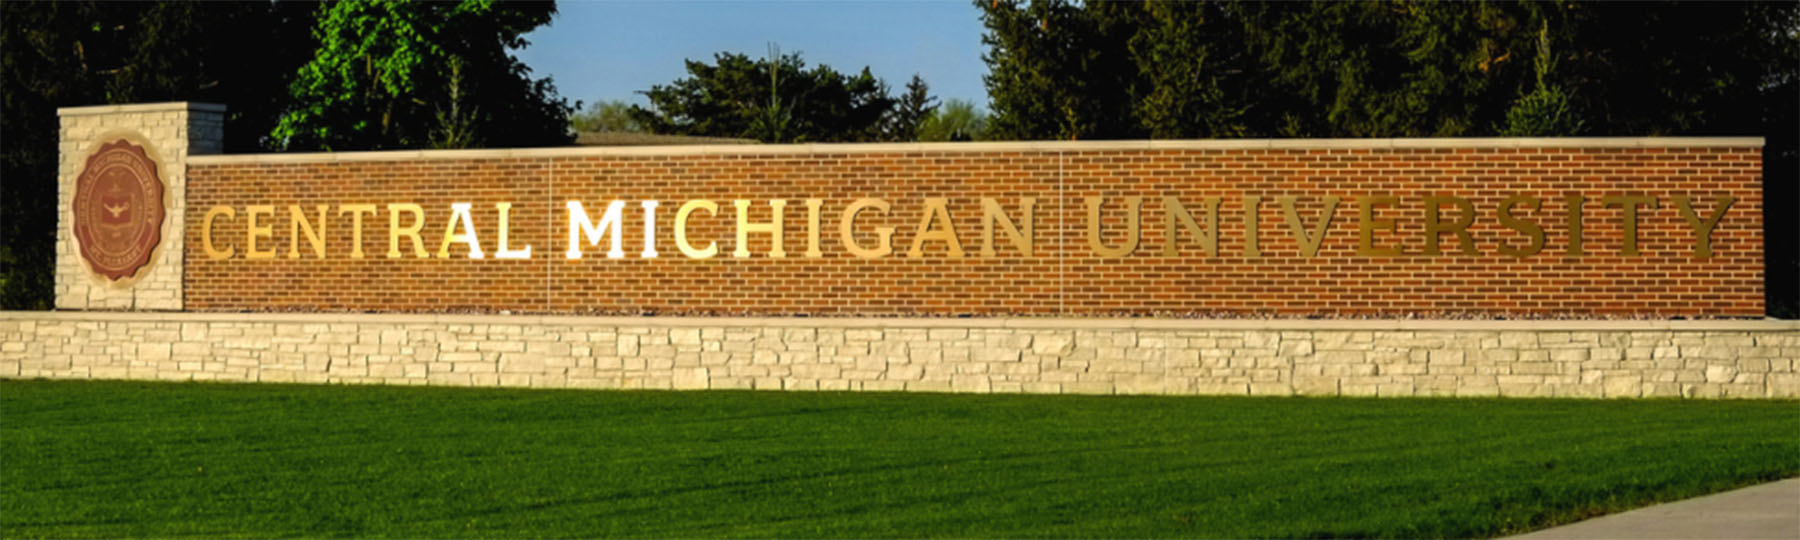 Central Michigan University sign